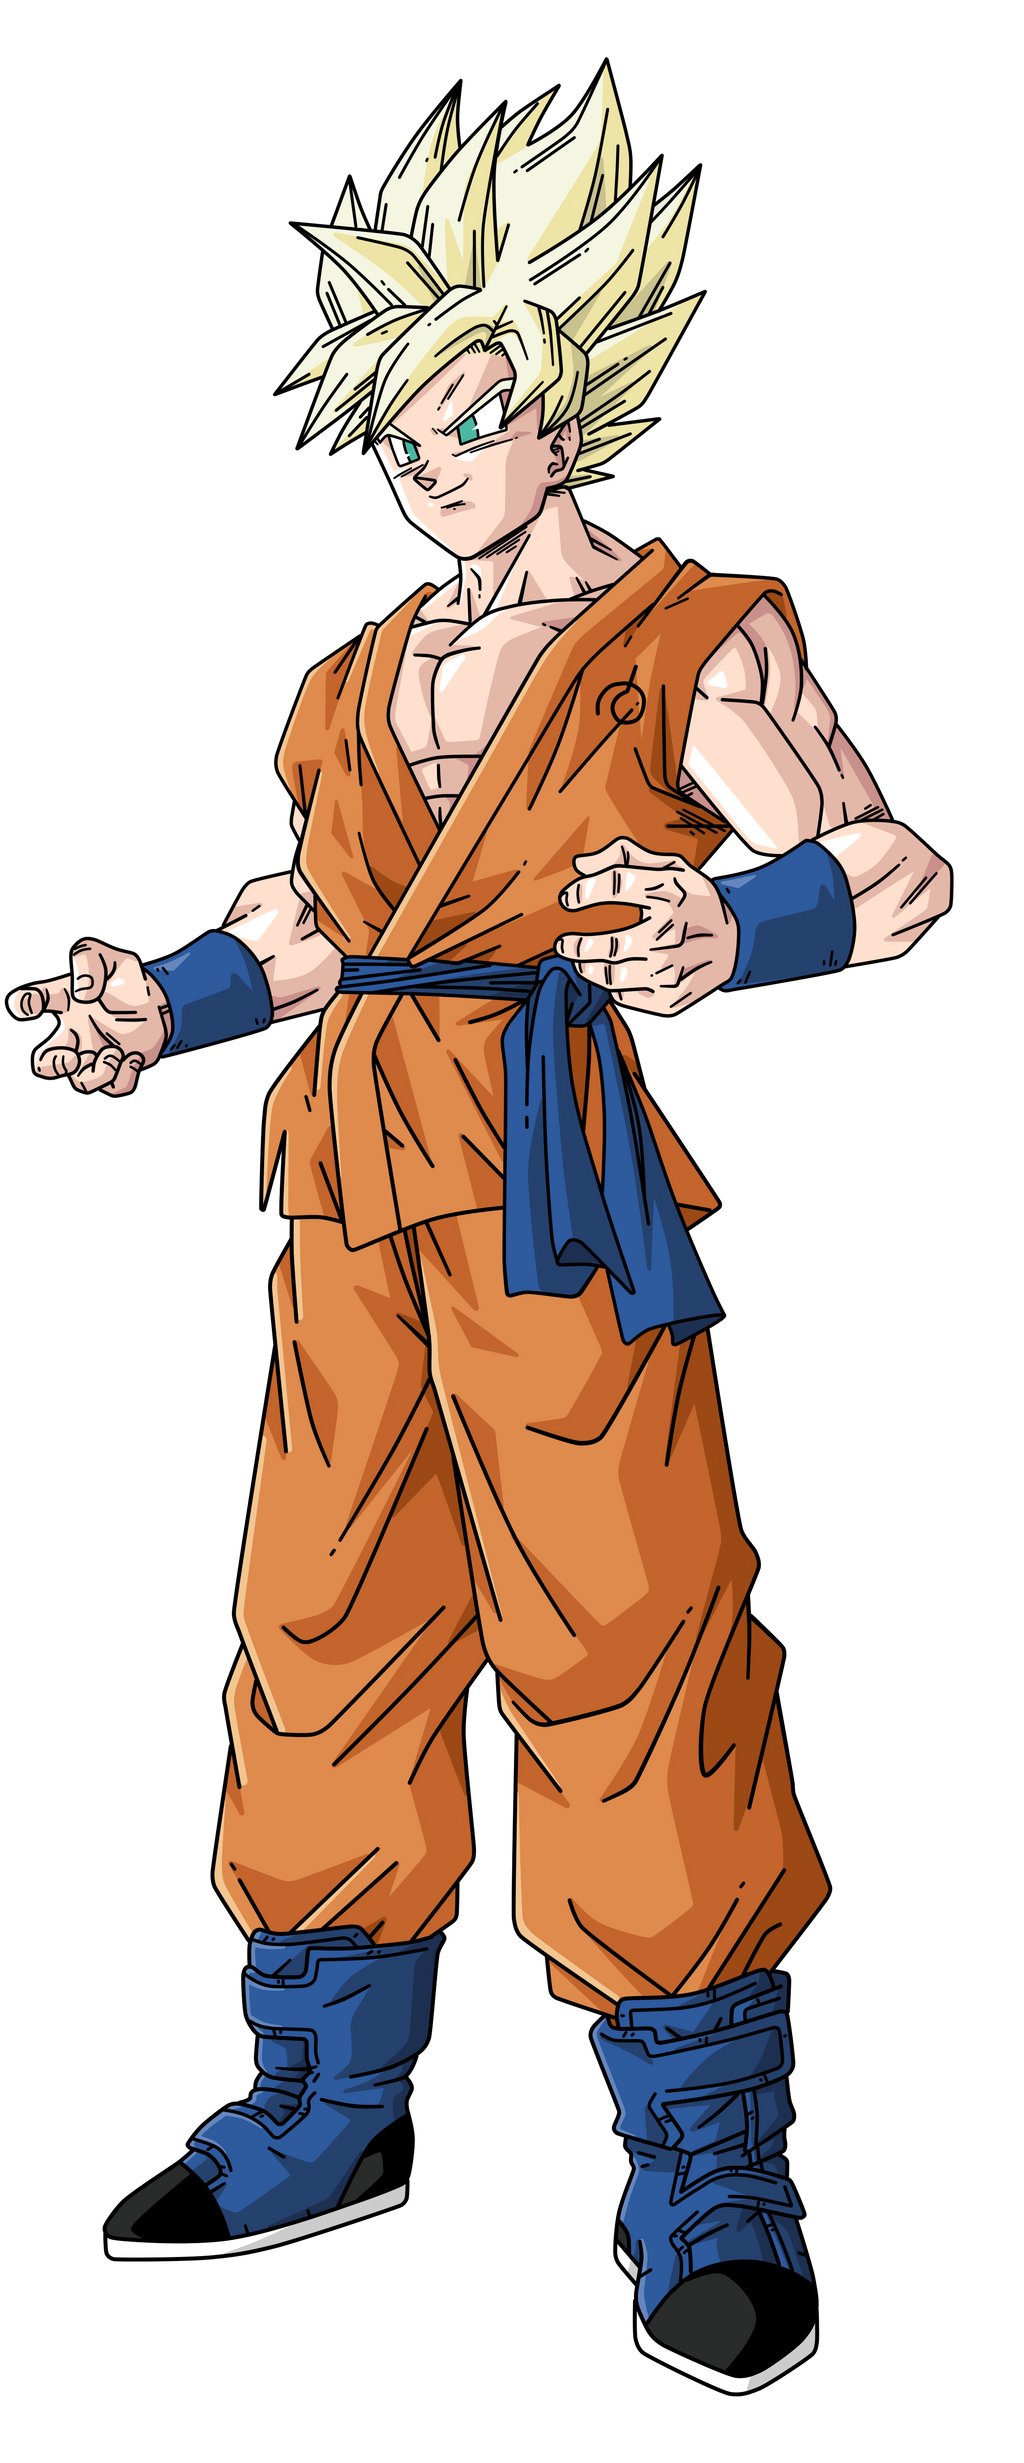 Goku Super Saiyan by BardockSonic on DeviantArt